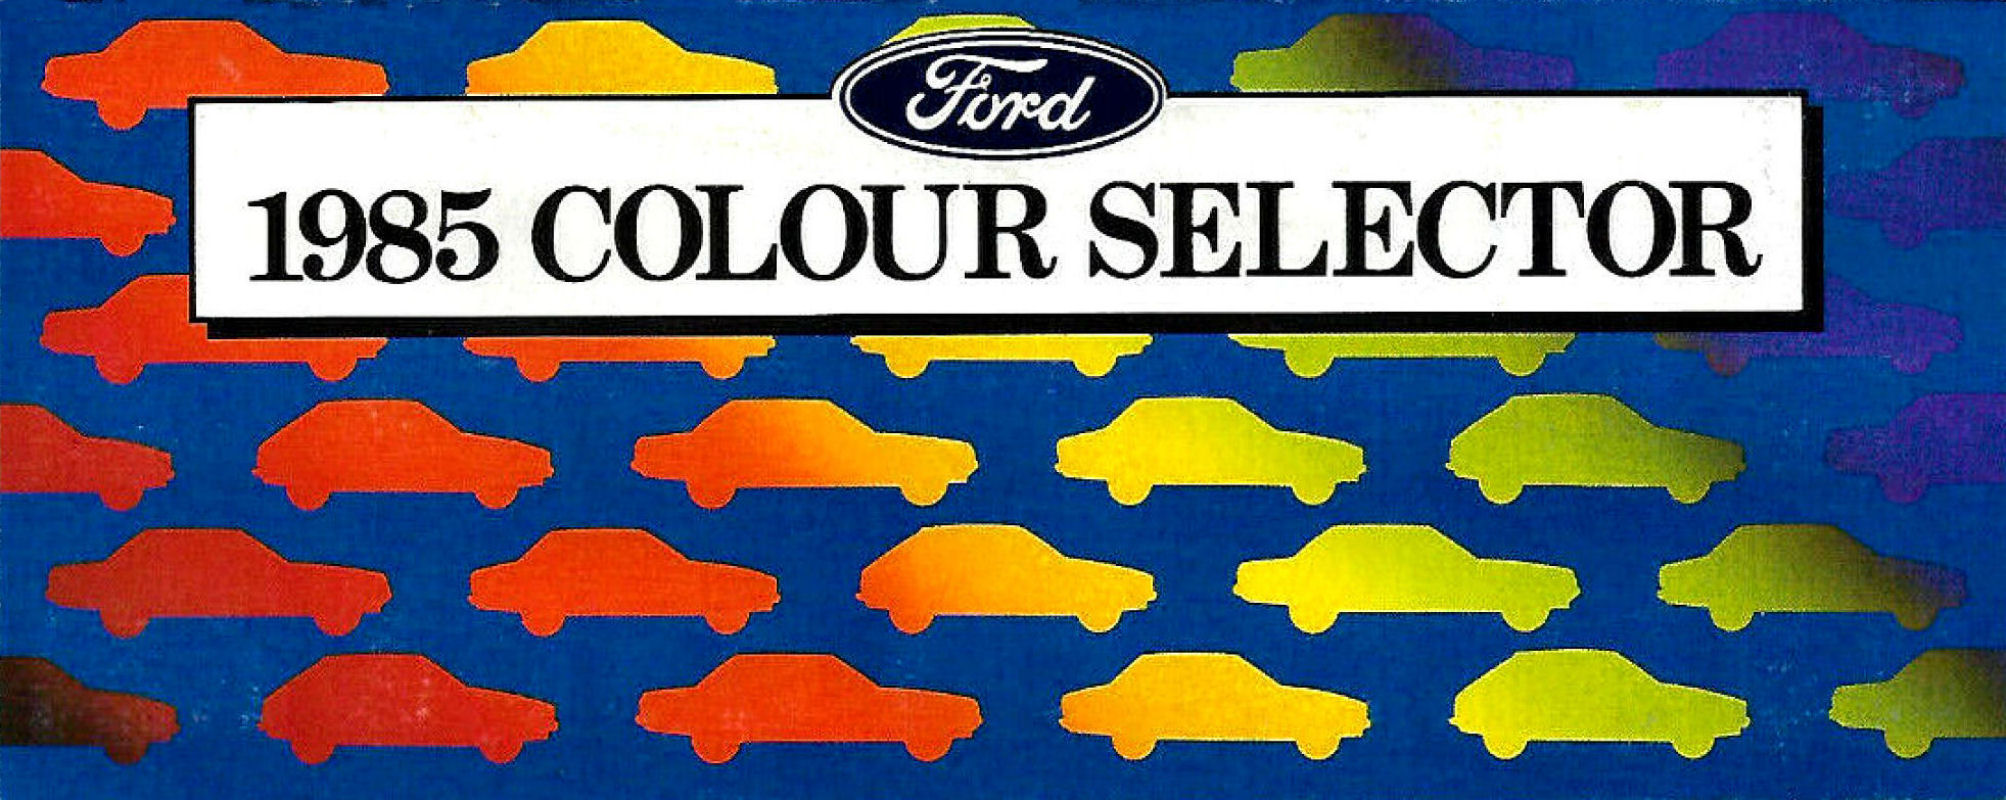 1985 Ford Colour Selector (Aus)-01